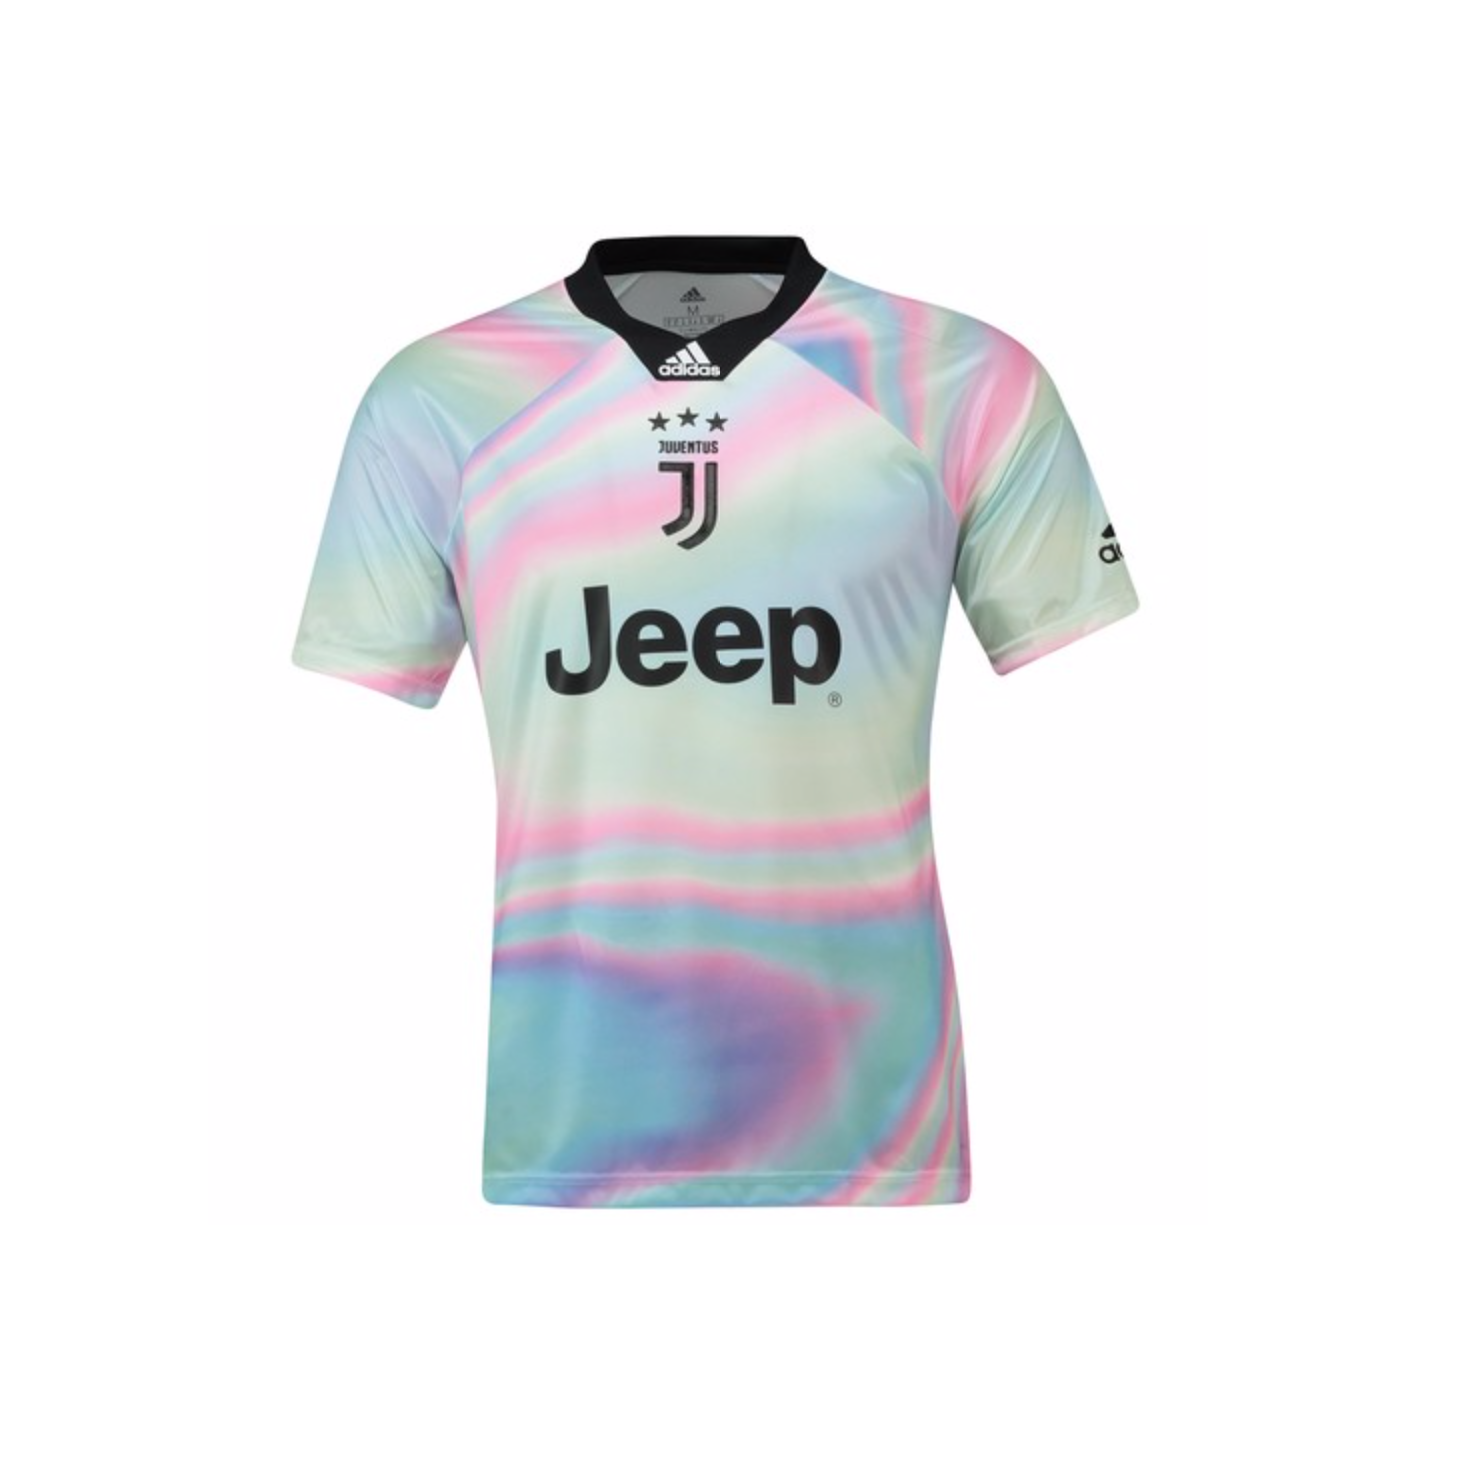 Juventus Fc Football Club 4th Kit Ea Sports X Adidas Limited Edition 2018 19 Fútbol Soccer Calcio Shirt Jersey Fussball Camisa Trikot Maillot Maglia